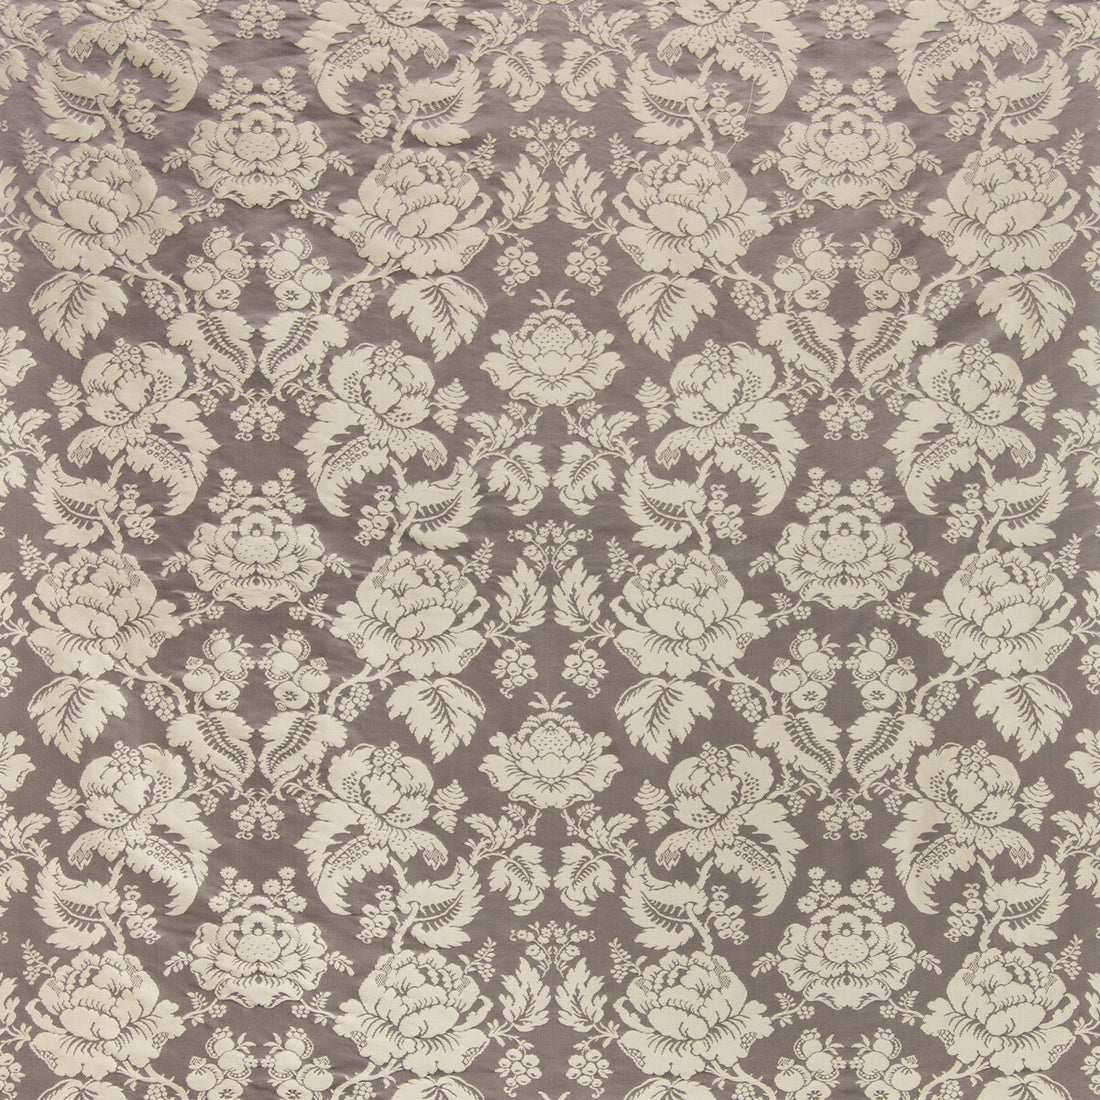 Moulins Damask fabric in charcoal color - pattern BR-81035.21.0 - by Brunschwig &amp; Fils